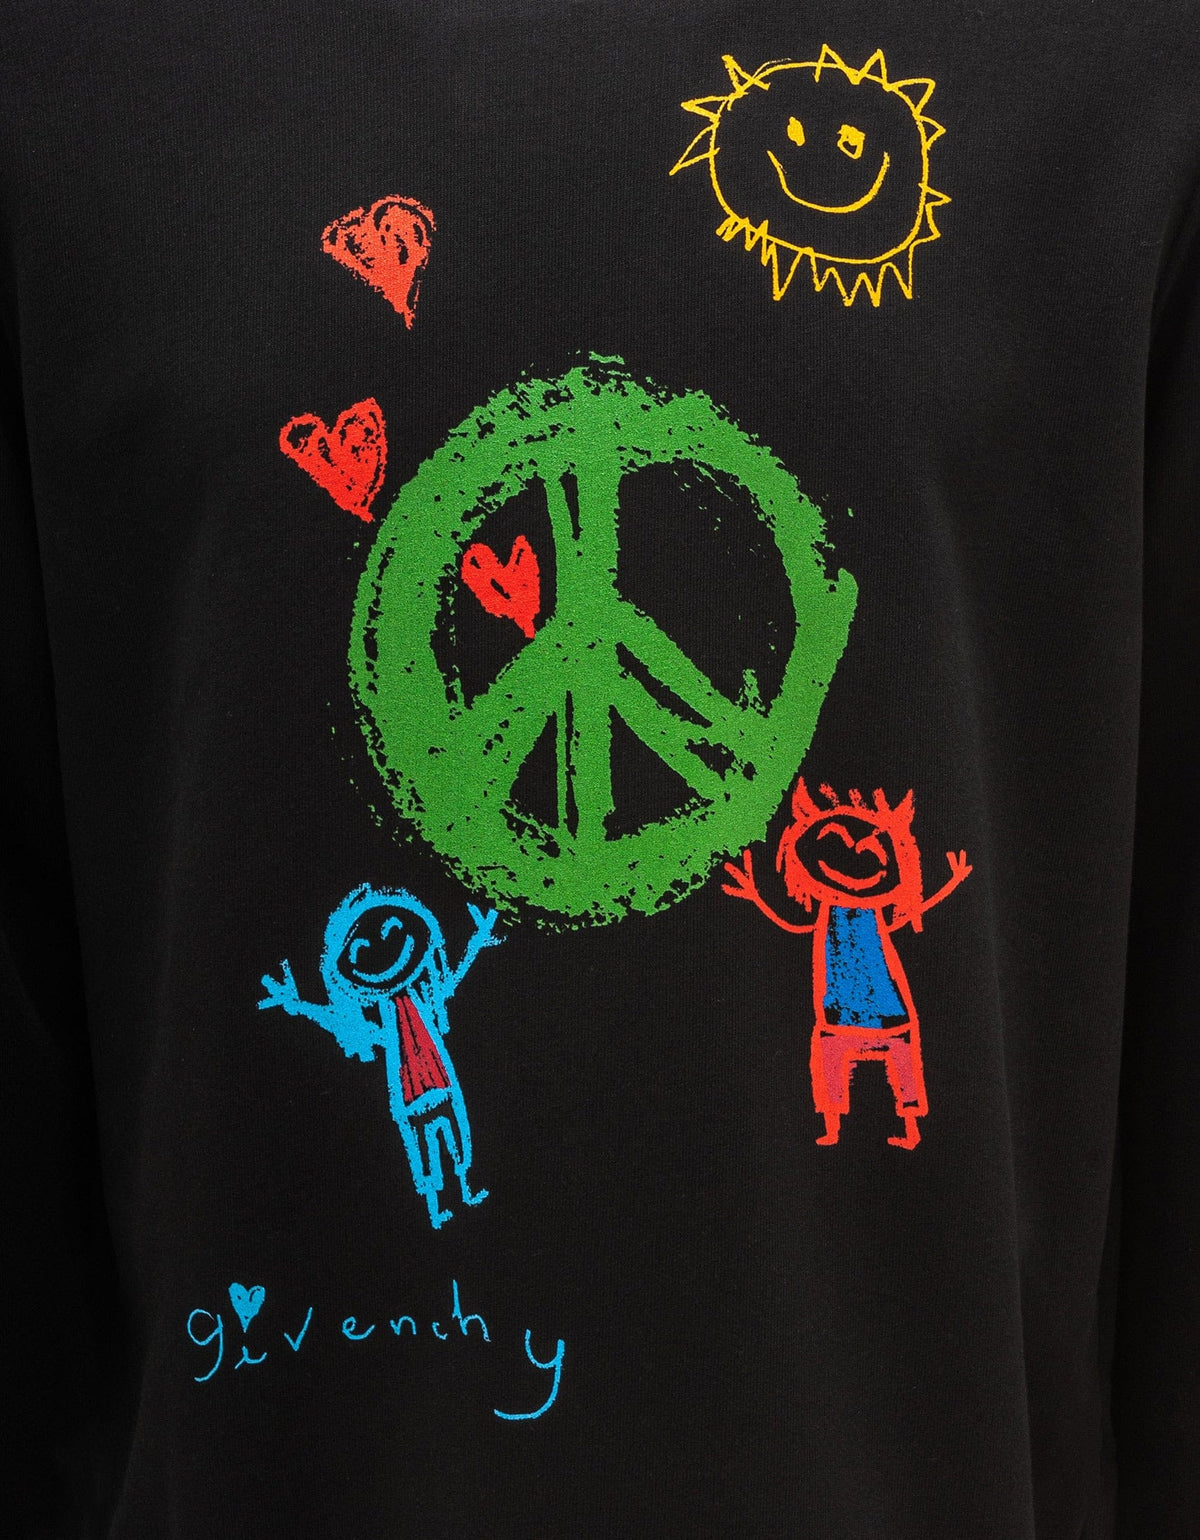 Givenchy Black Peace Graphic Print Sweatshirt